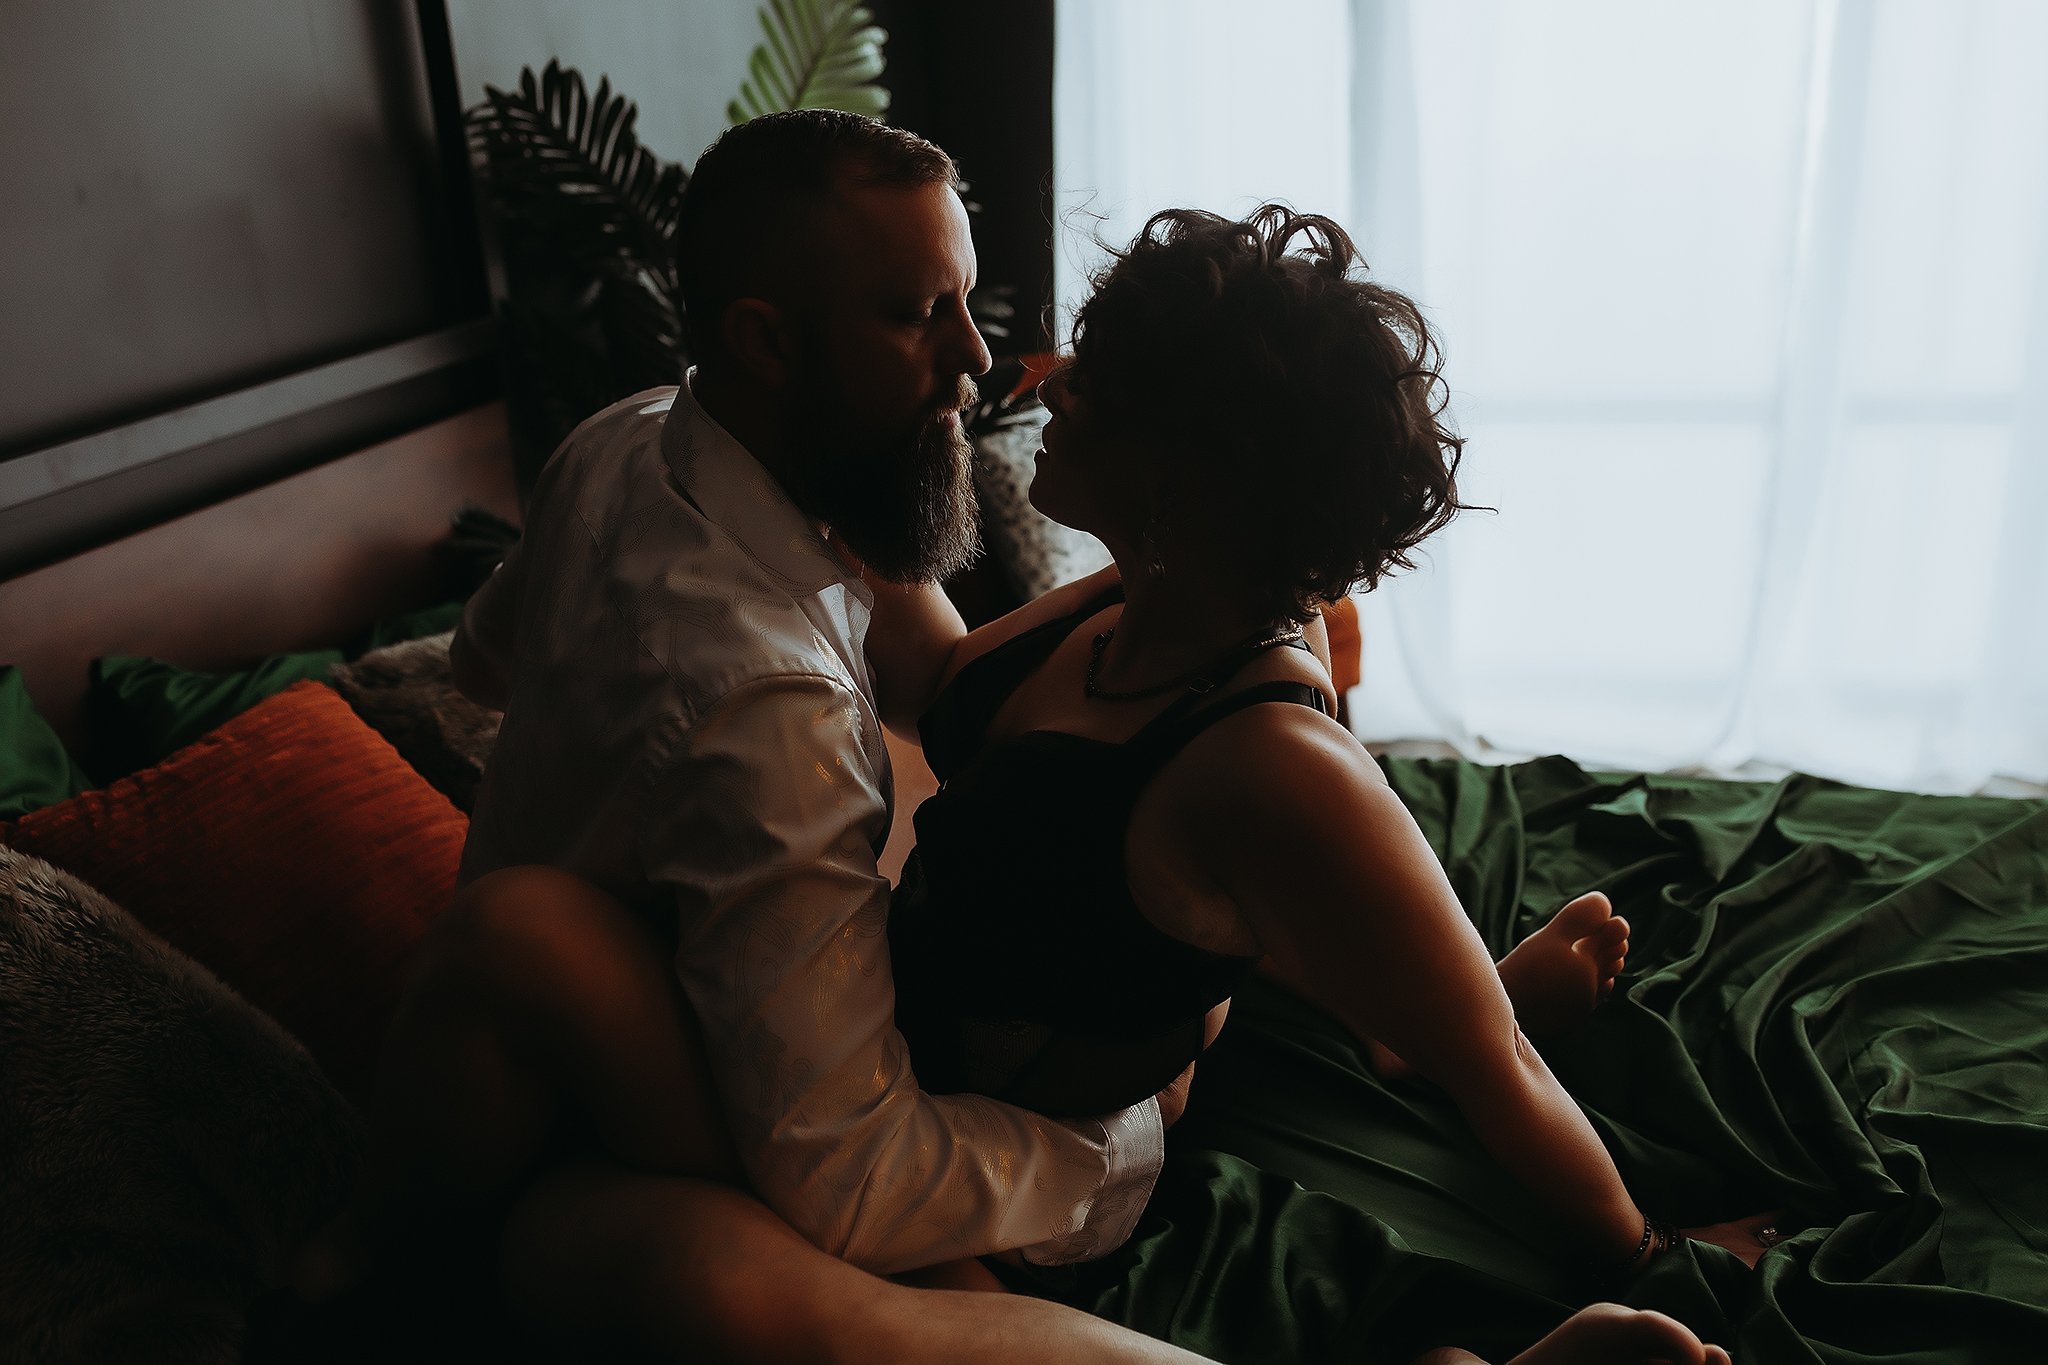 boudoir photography: Flirting with Seduction